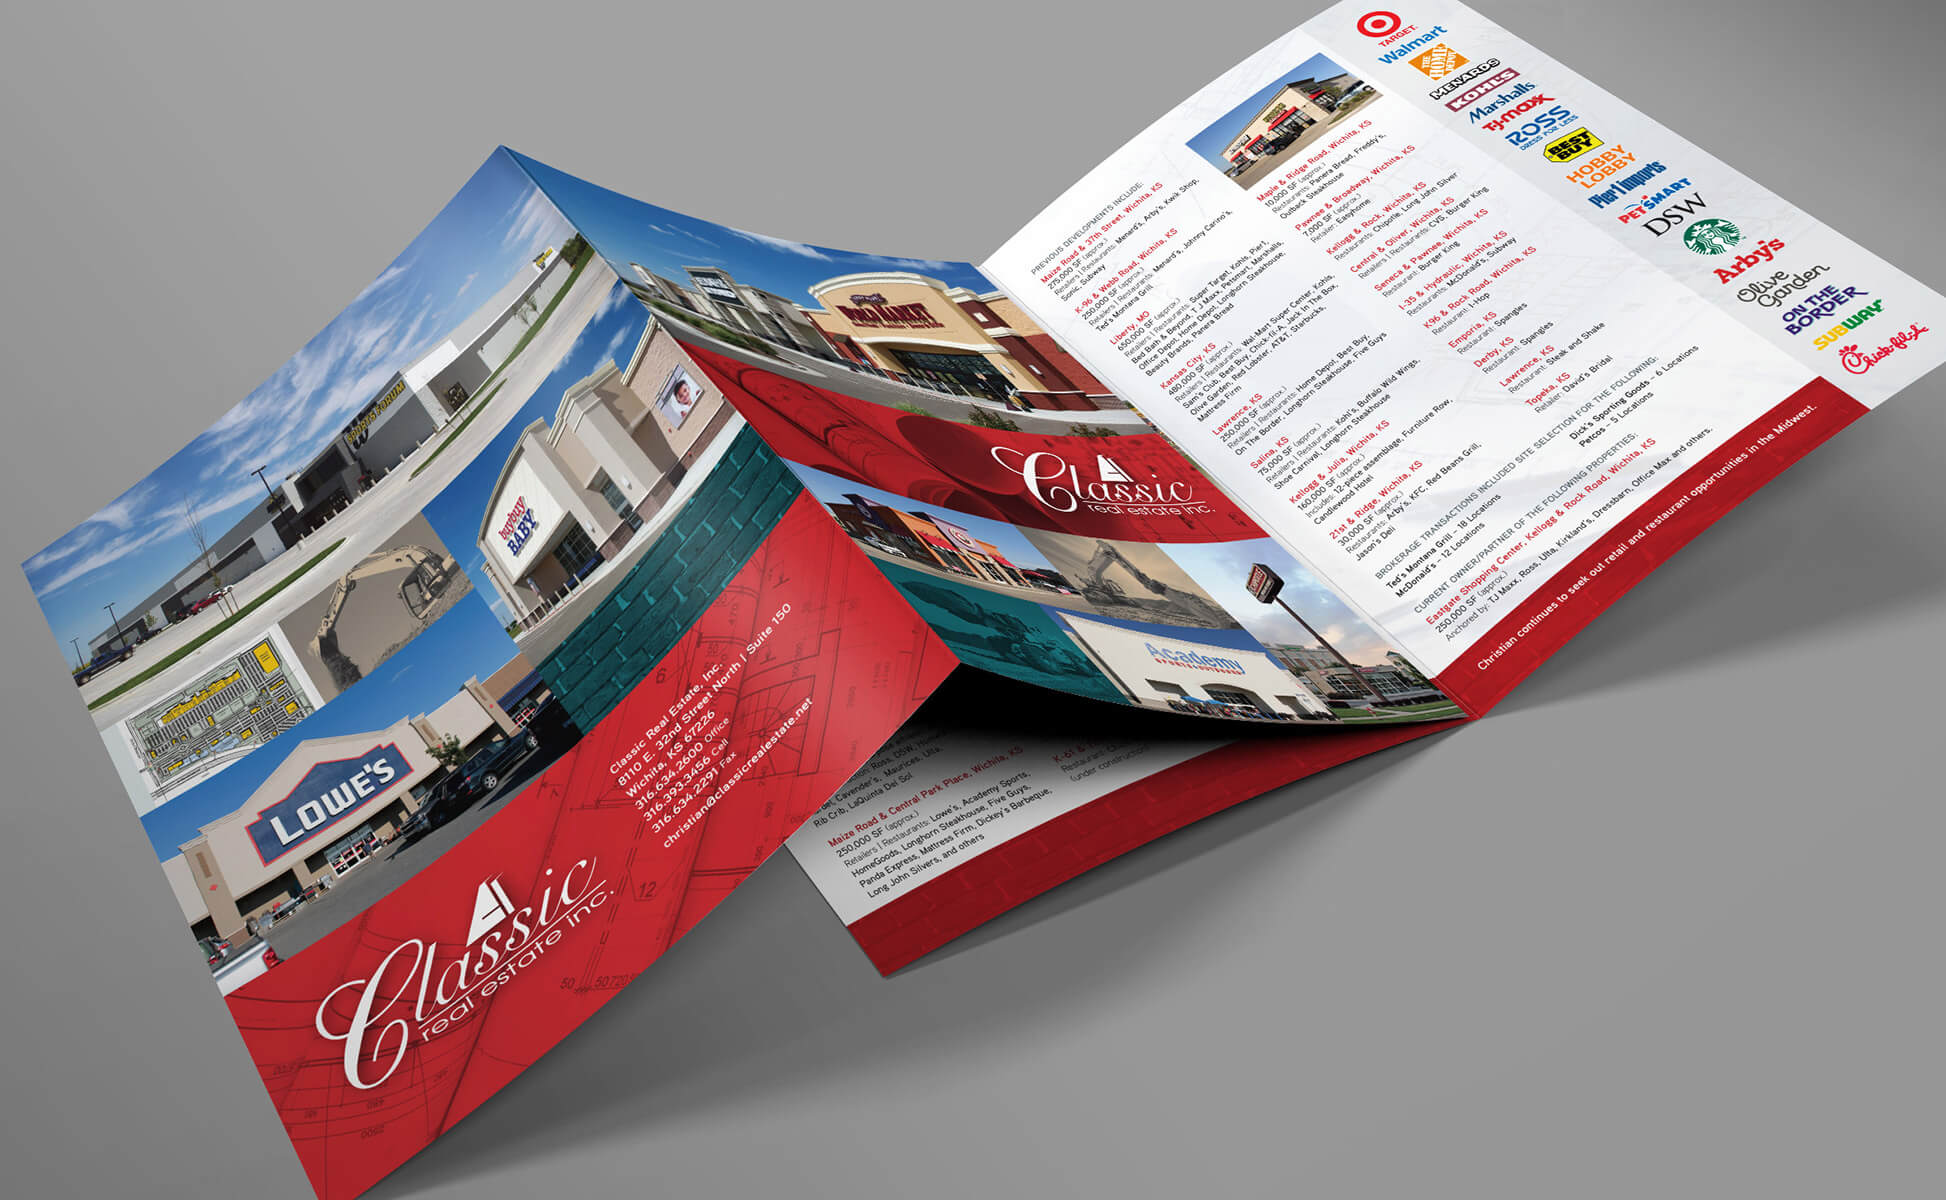 Classic Real Estate Brochure Design Studio928 Branding and Design Agency